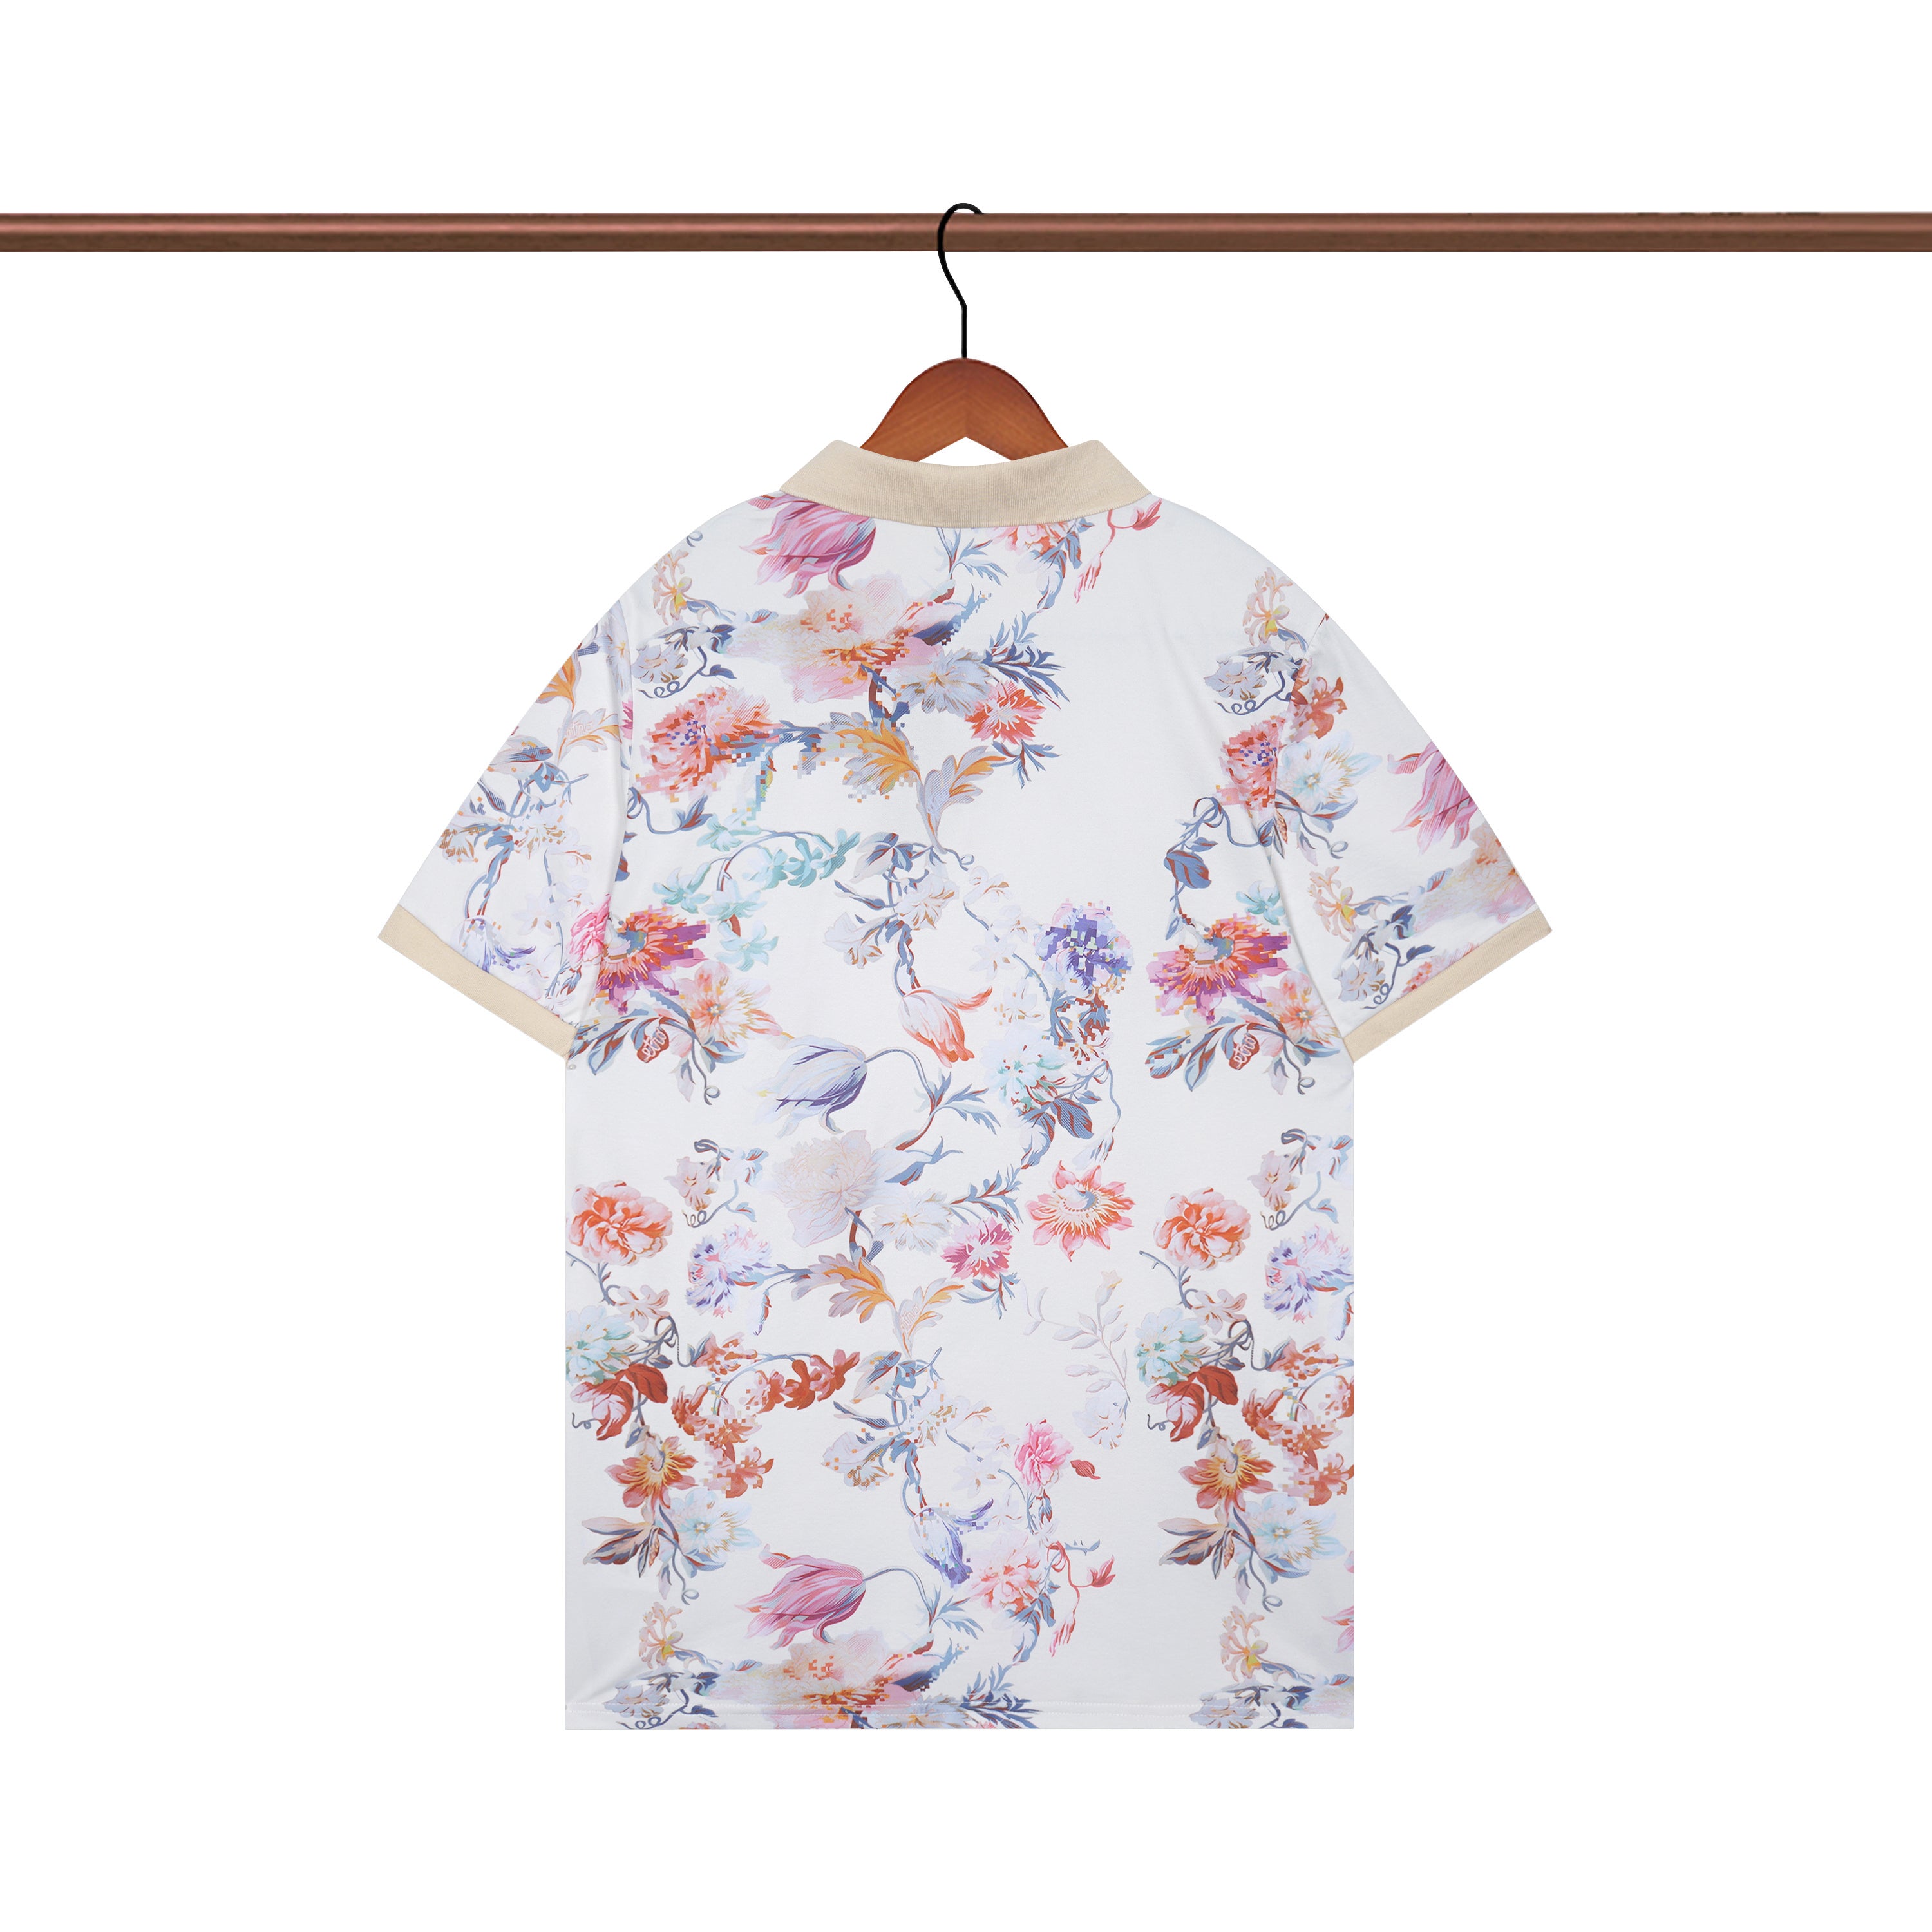 Dior Summer New Stereogram Print T Shirt Lapel Short Sleeve Polo